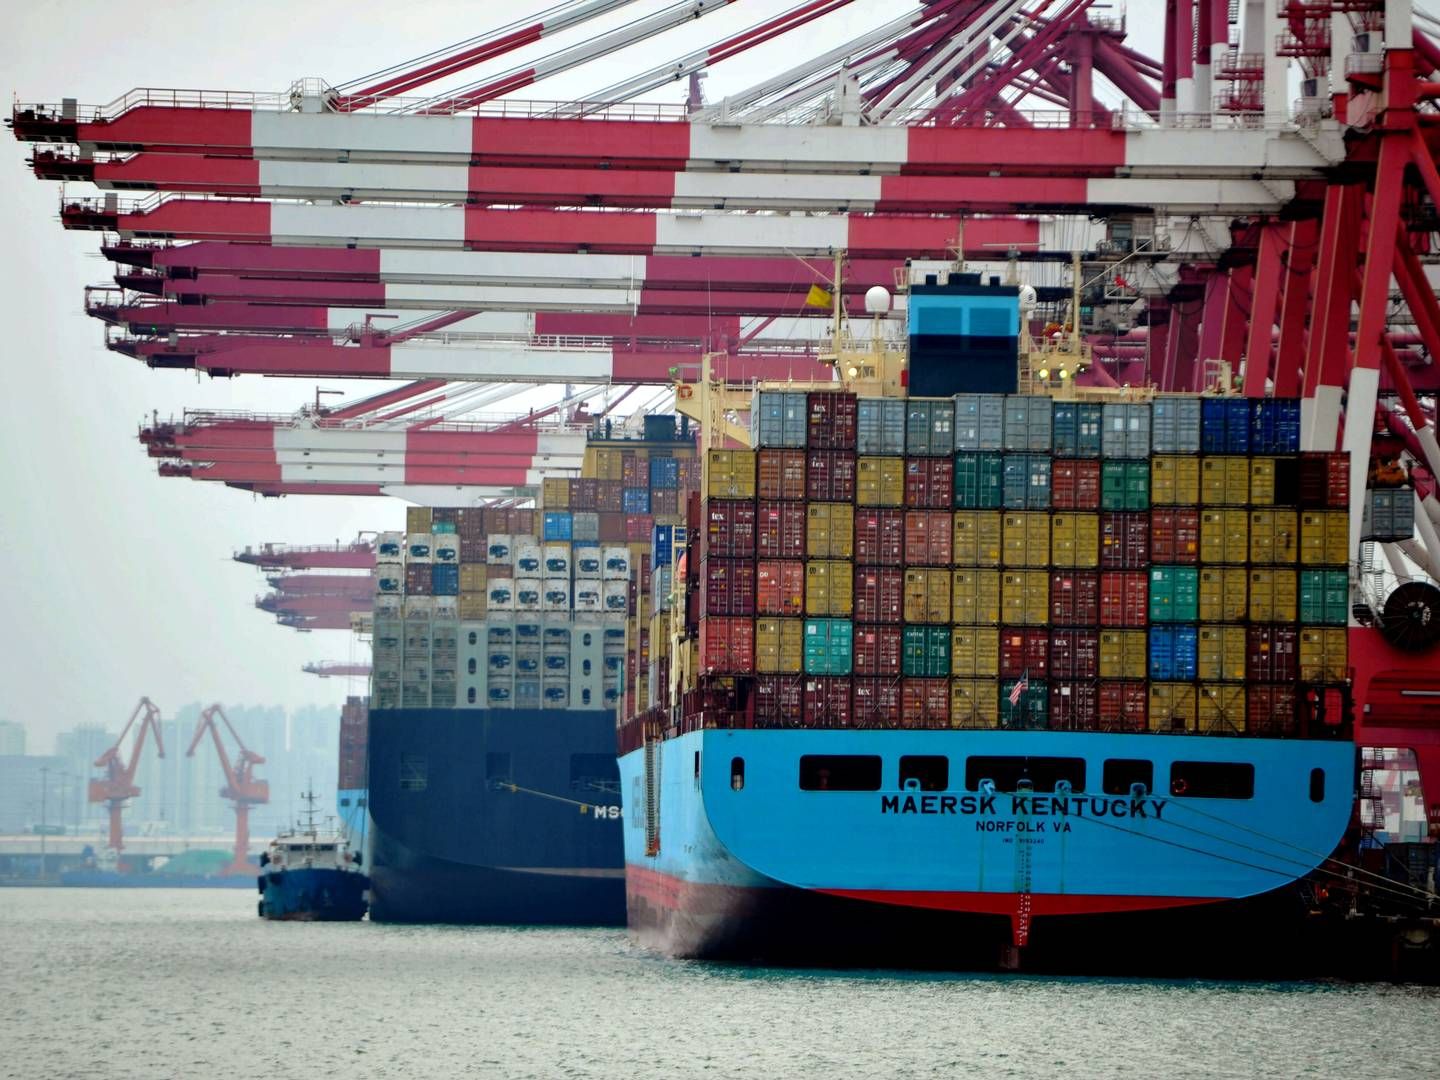 Verdens regeringer må reagere med konkrete politiske tiltag, der for alvor kan fremskynde shippings grønne omstilling, mener ISC og WSC. | Foto: Yu fangping